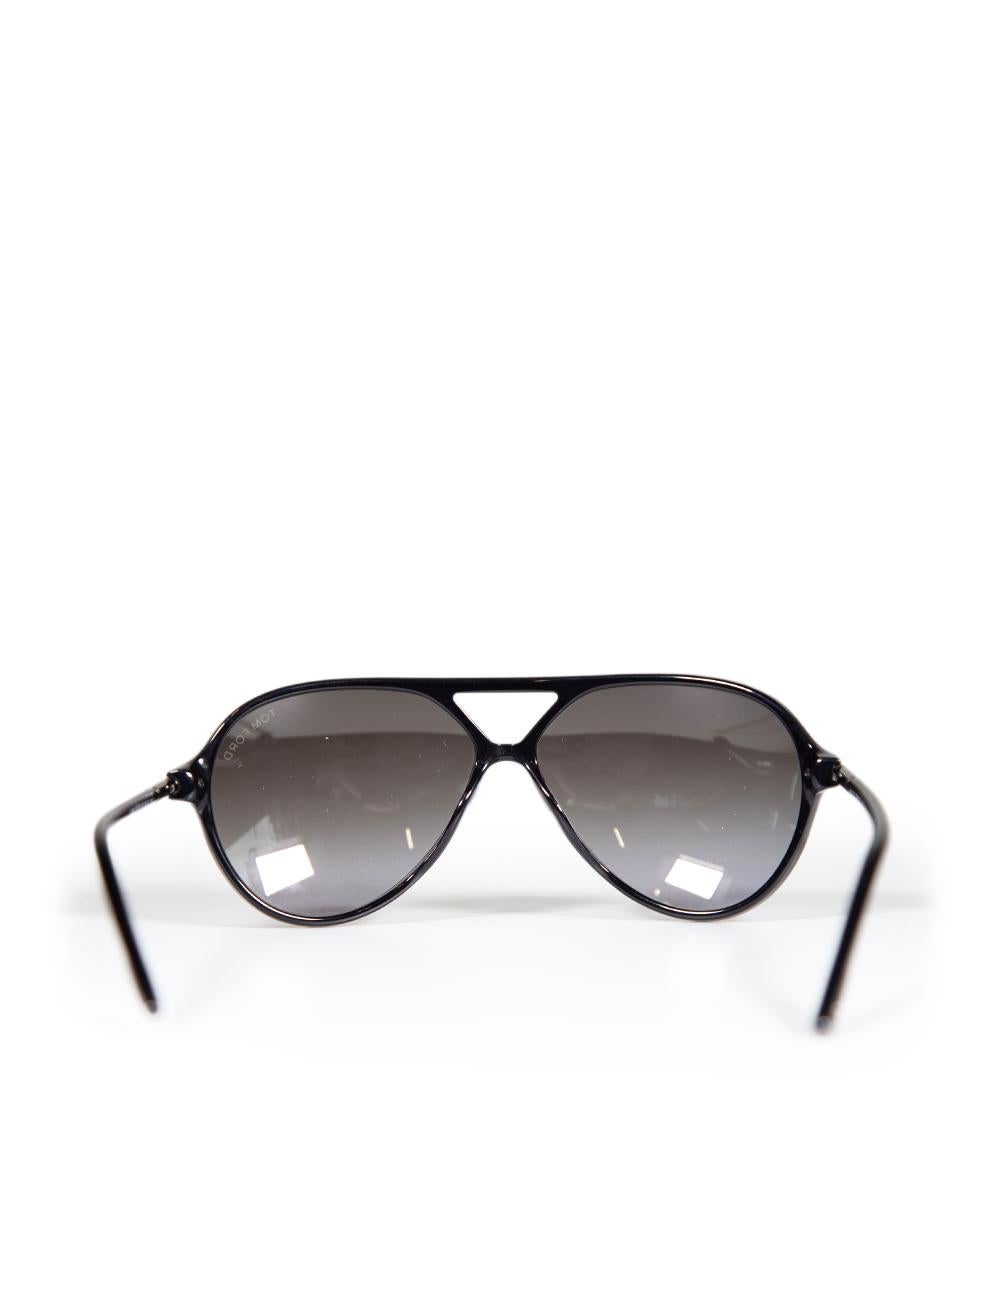 Women's Tom Ford Shiny Black Leopold Sunglasses For Sale